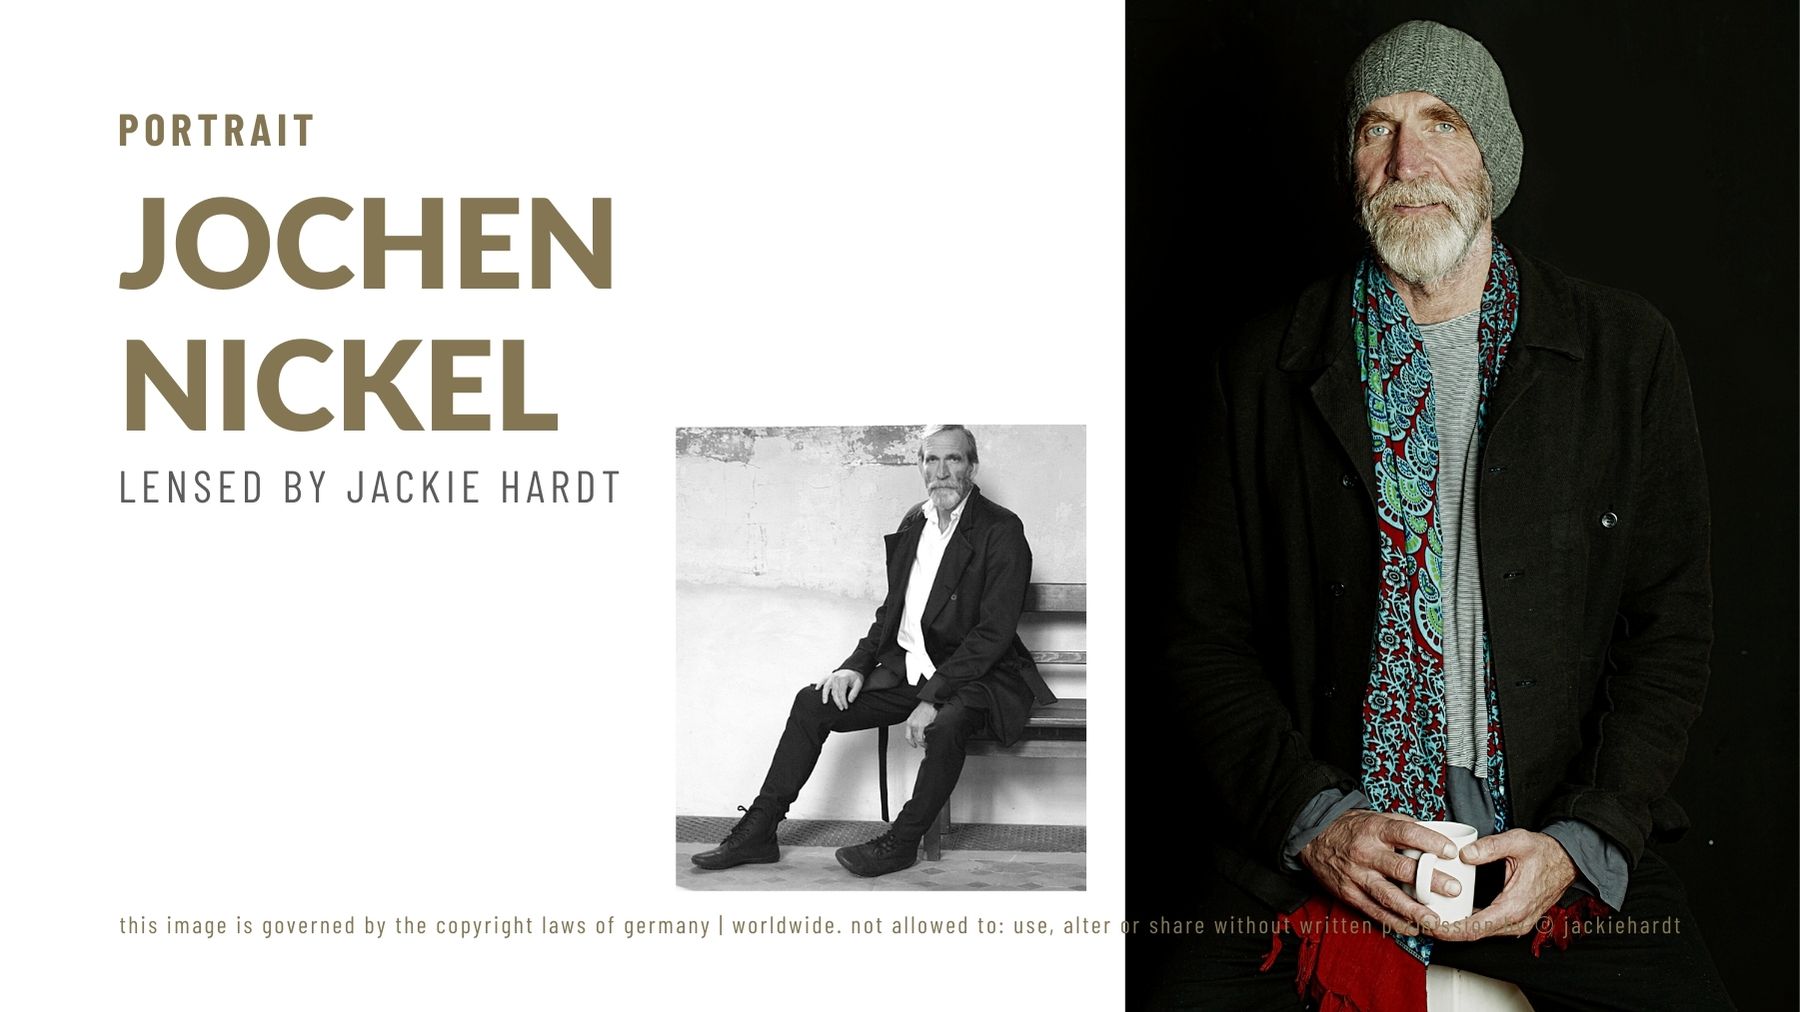 Jochen Nickel, Actor, Captured by Jackie Hardt